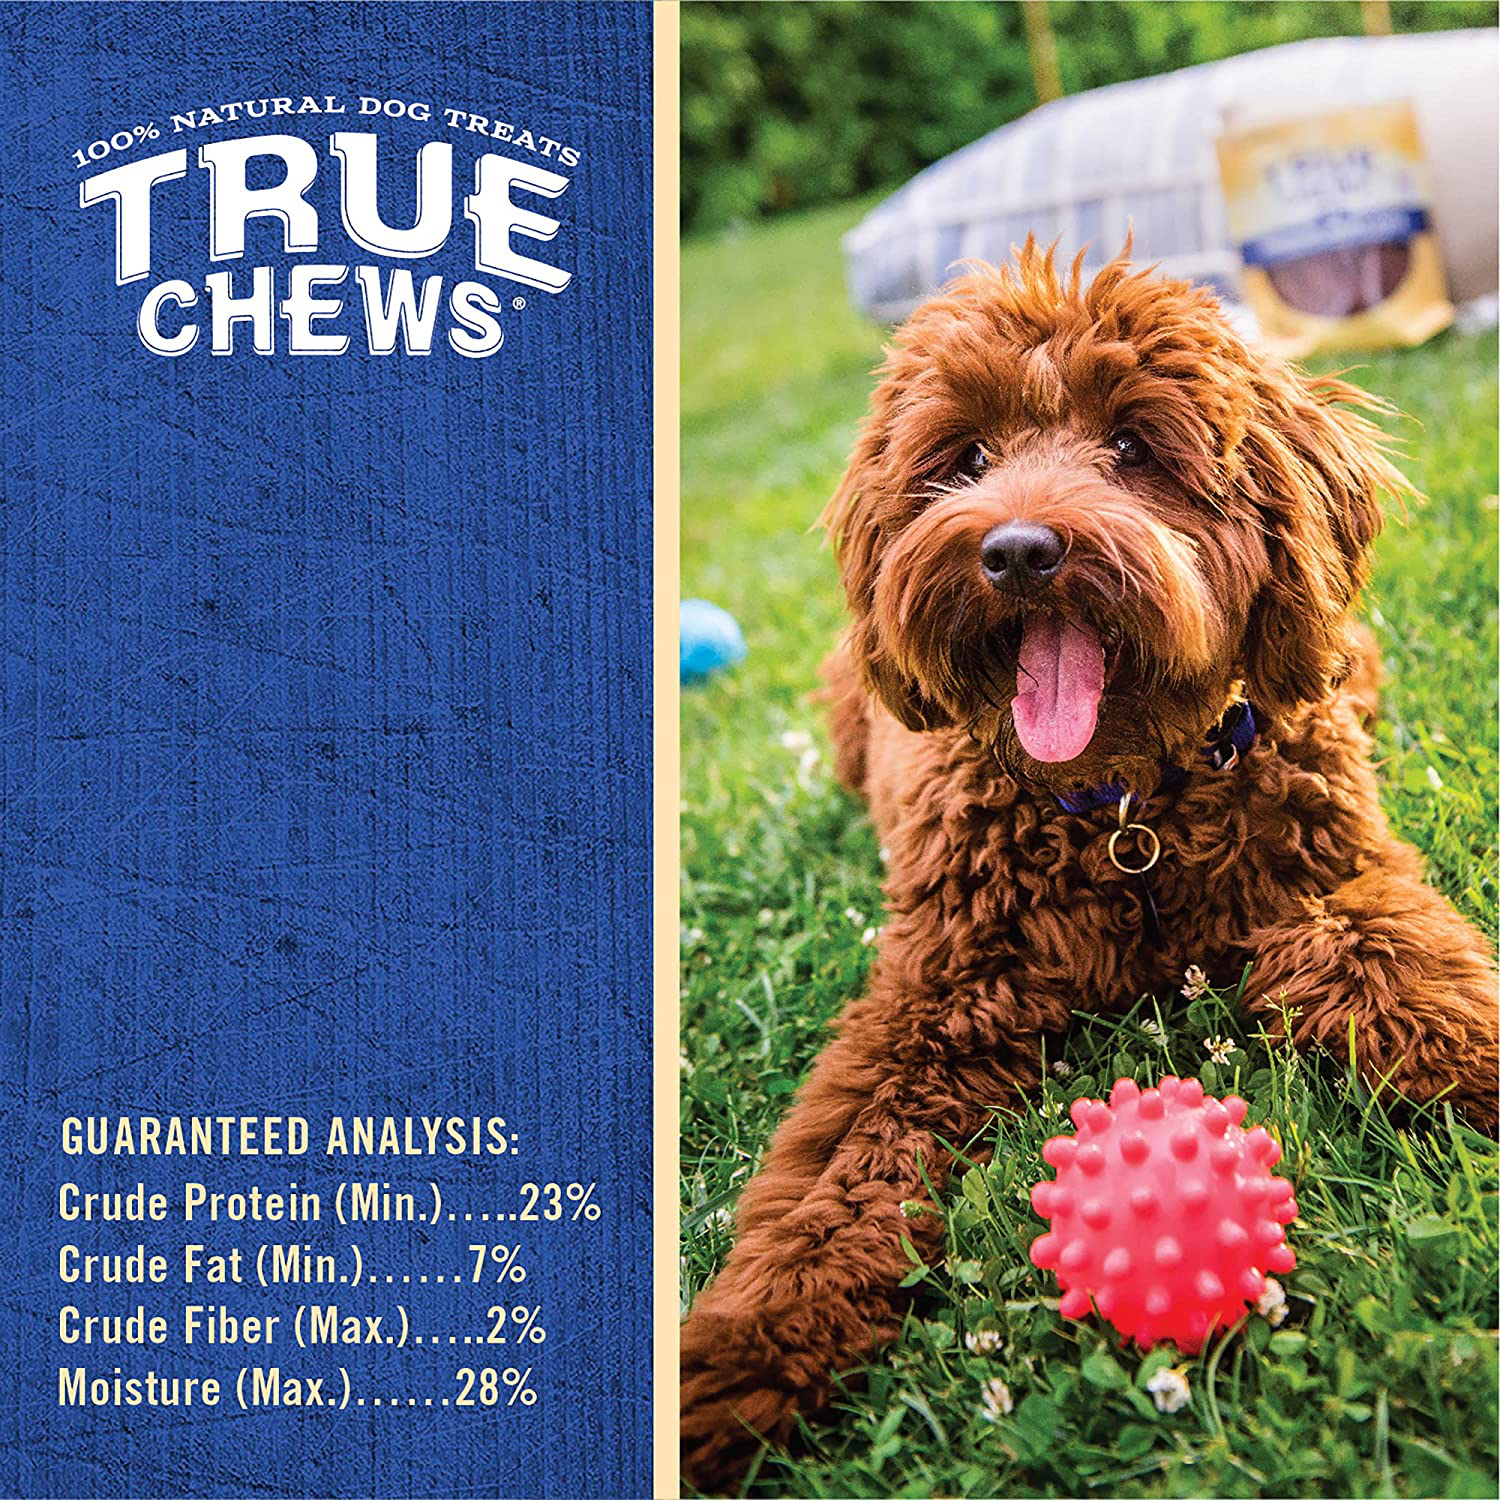 True Chews Pork & Chicken Sausage Recipe 14 Oz, Medium, Model Number: 019216-2303 Animals & Pet Supplies > Pet Supplies > Dog Supplies > Dog Treats True Chews   